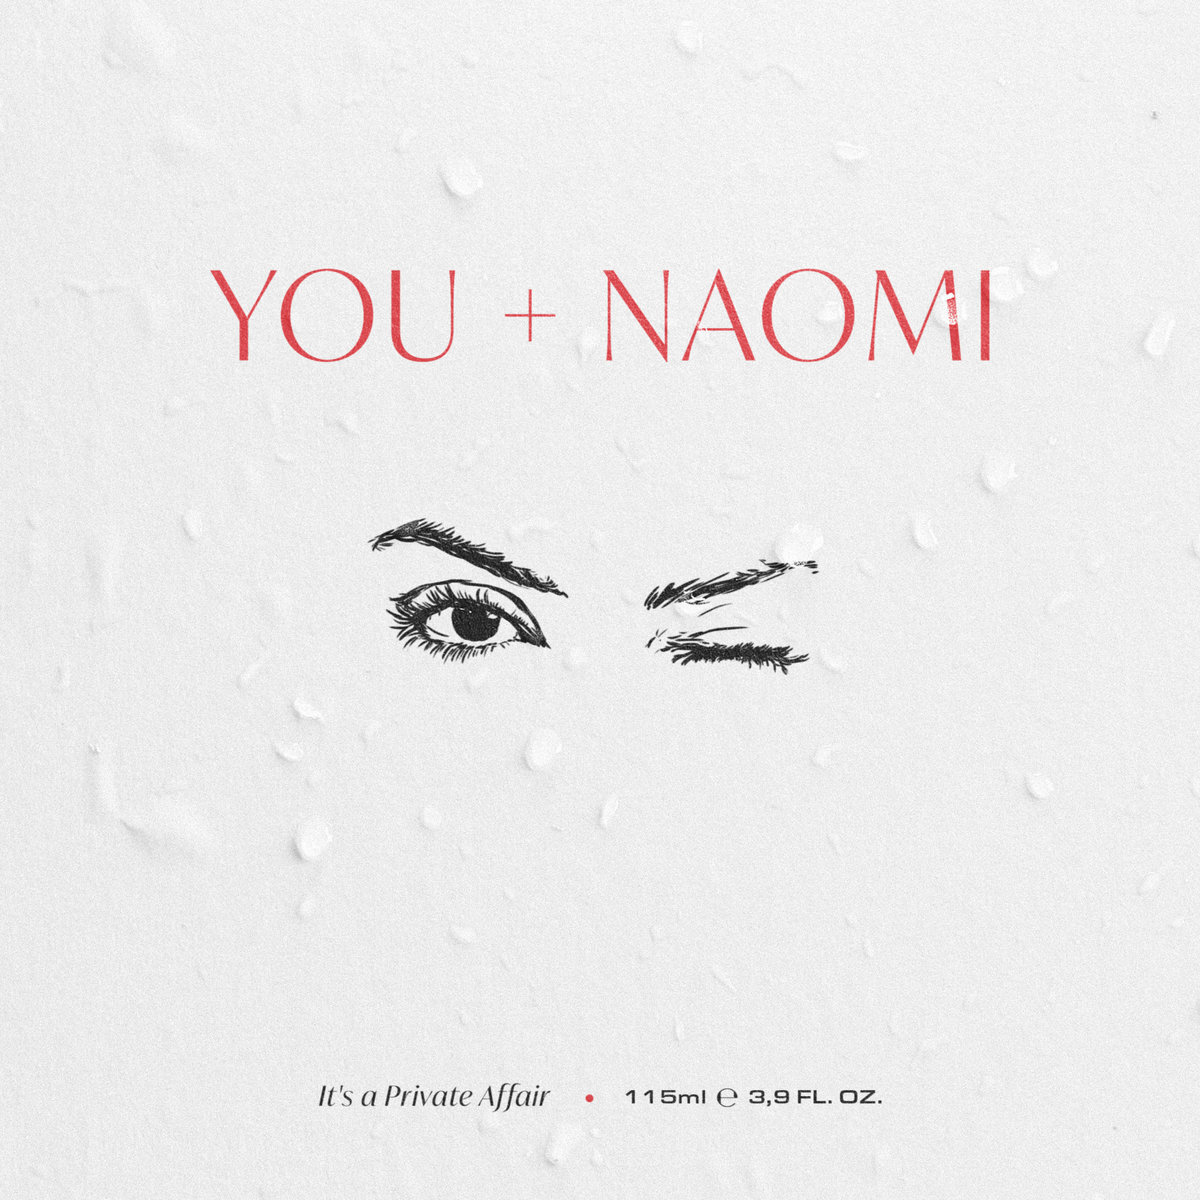 * Seance Crasher - You and Naomi